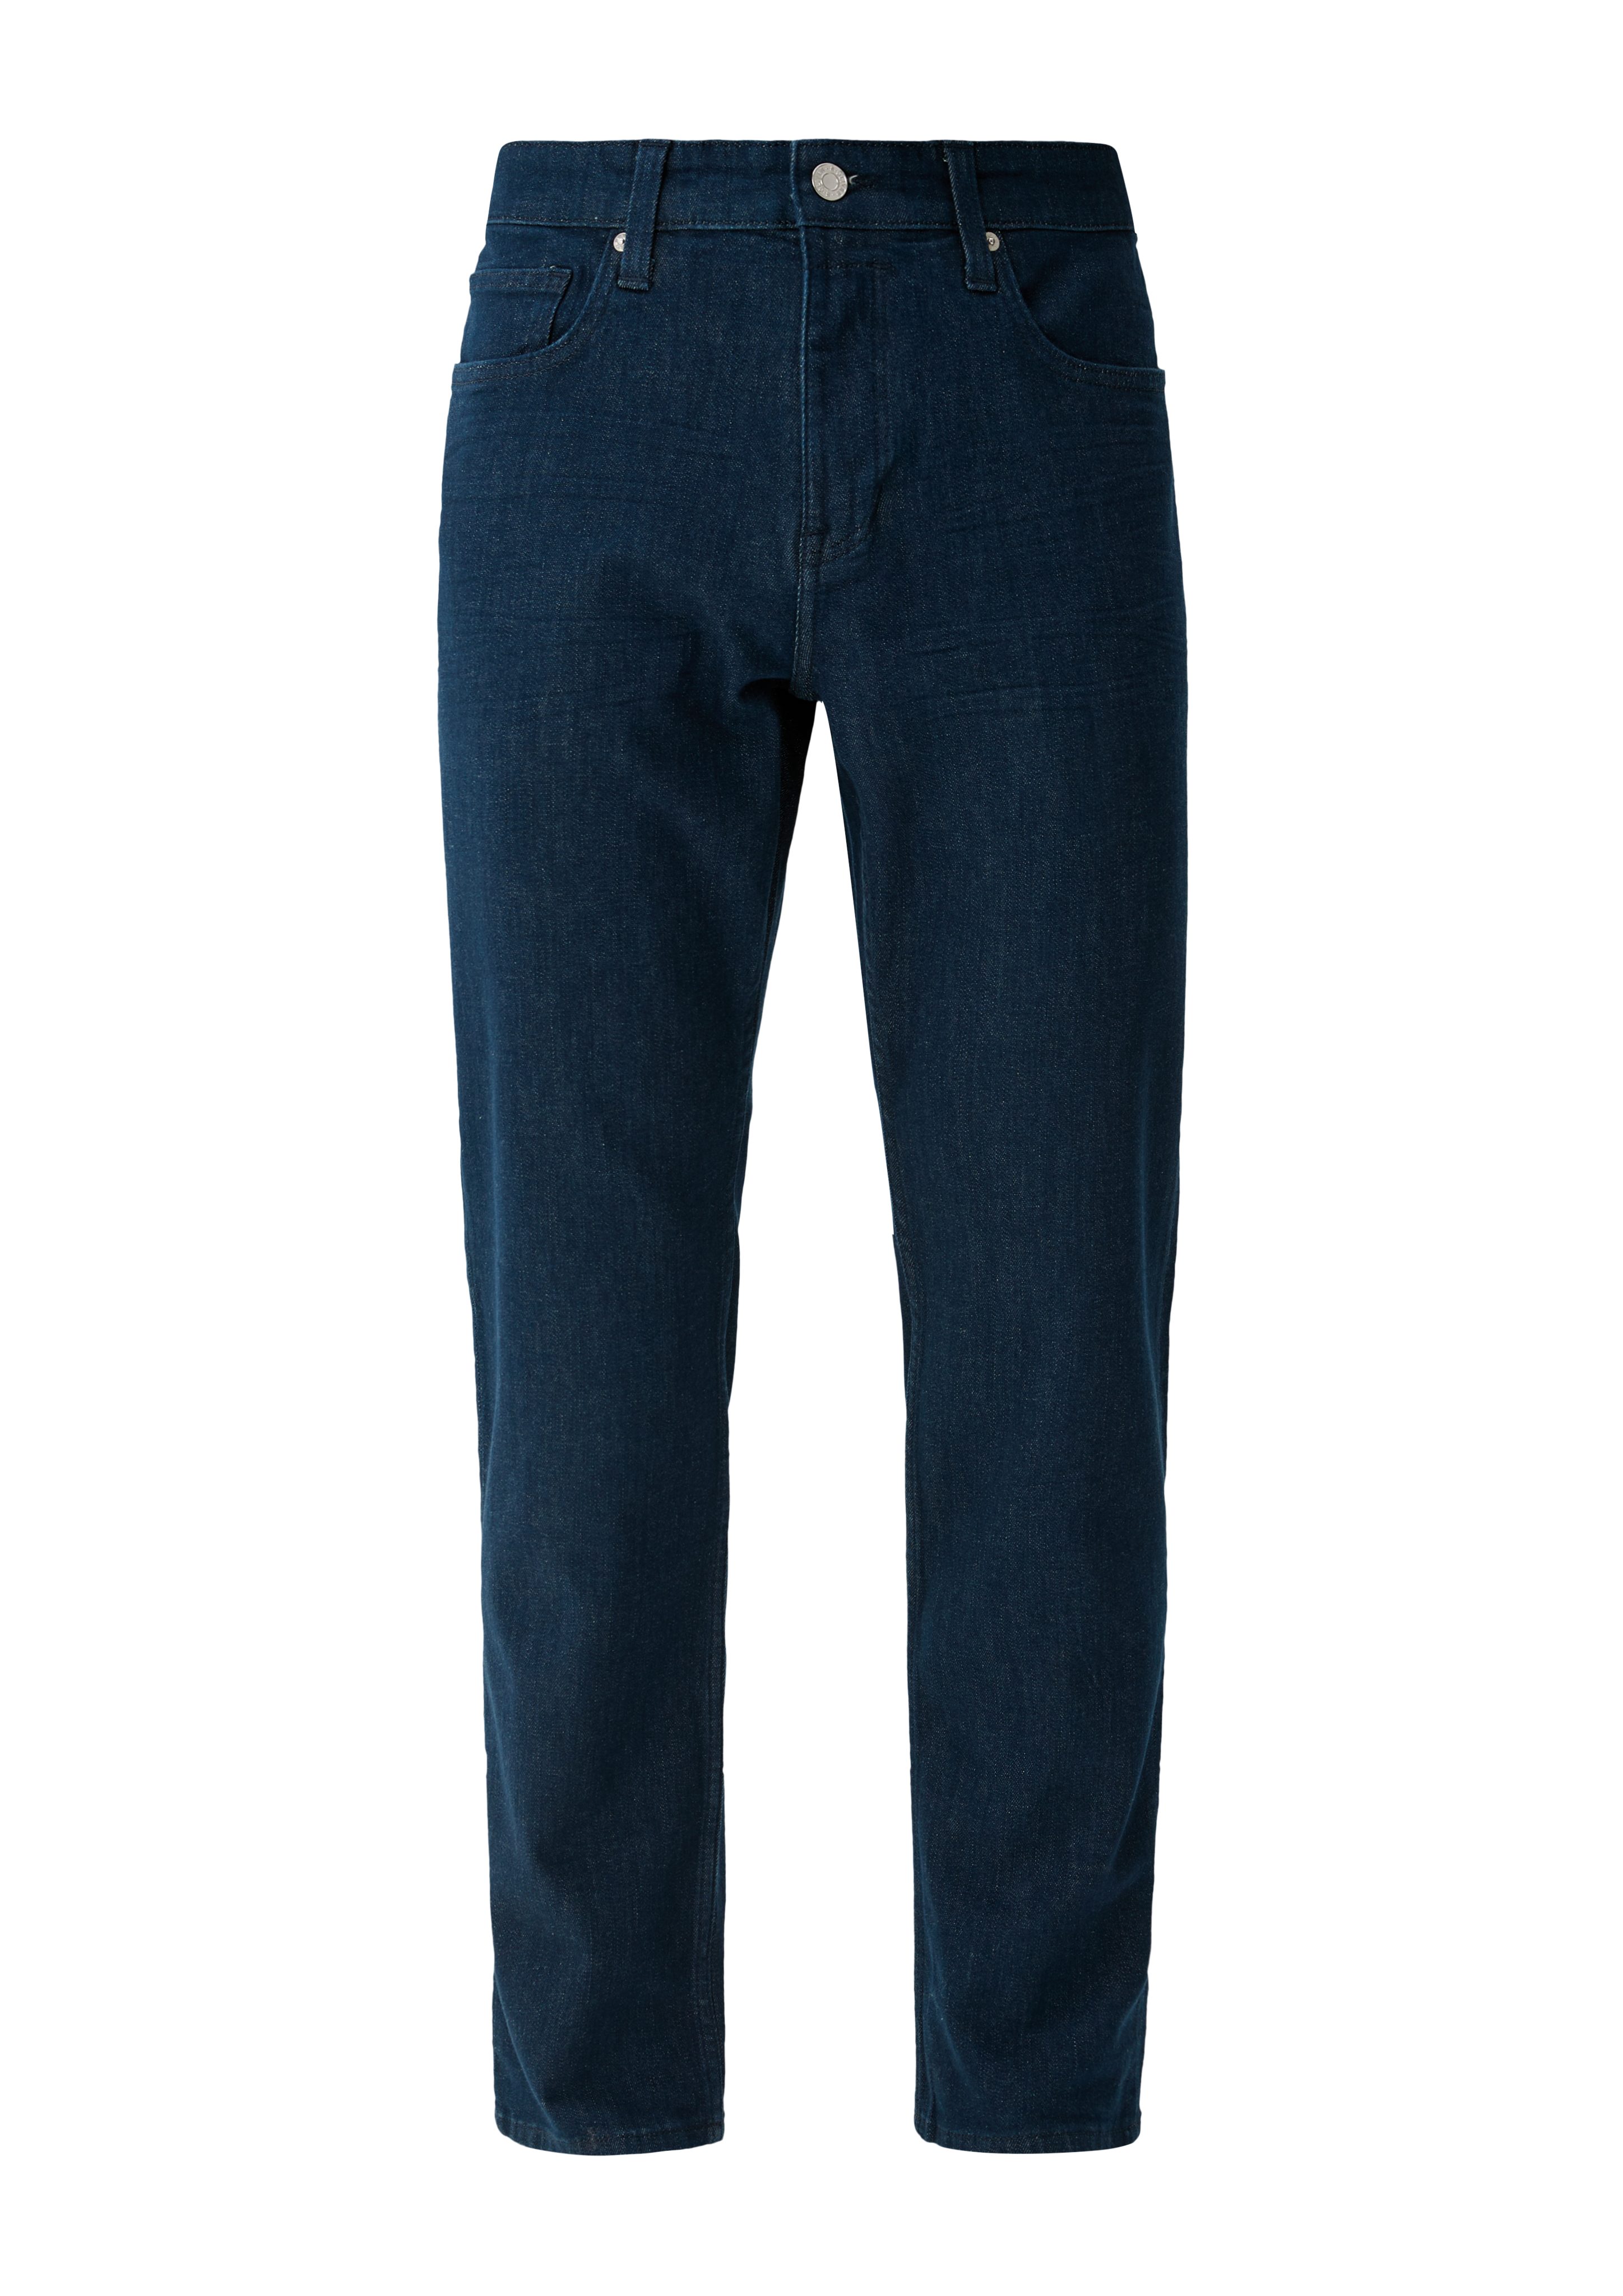 Waschung s.Oliver / Slim Rise High Stoffhose Jeans Fit Leg / dunkelblau Regular /